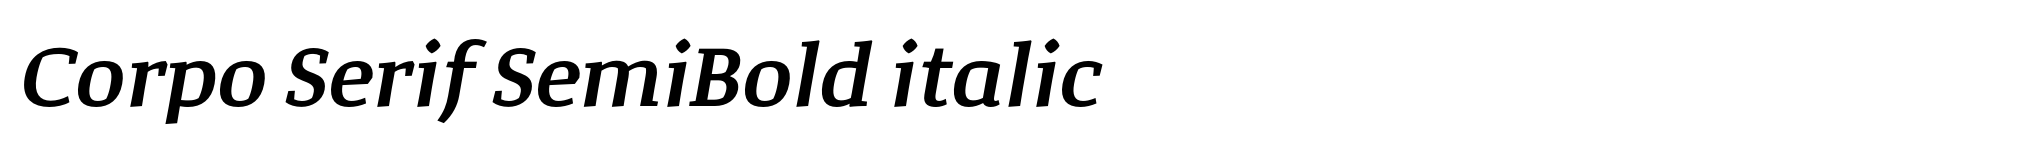 Corpo Serif SemiBold italic image